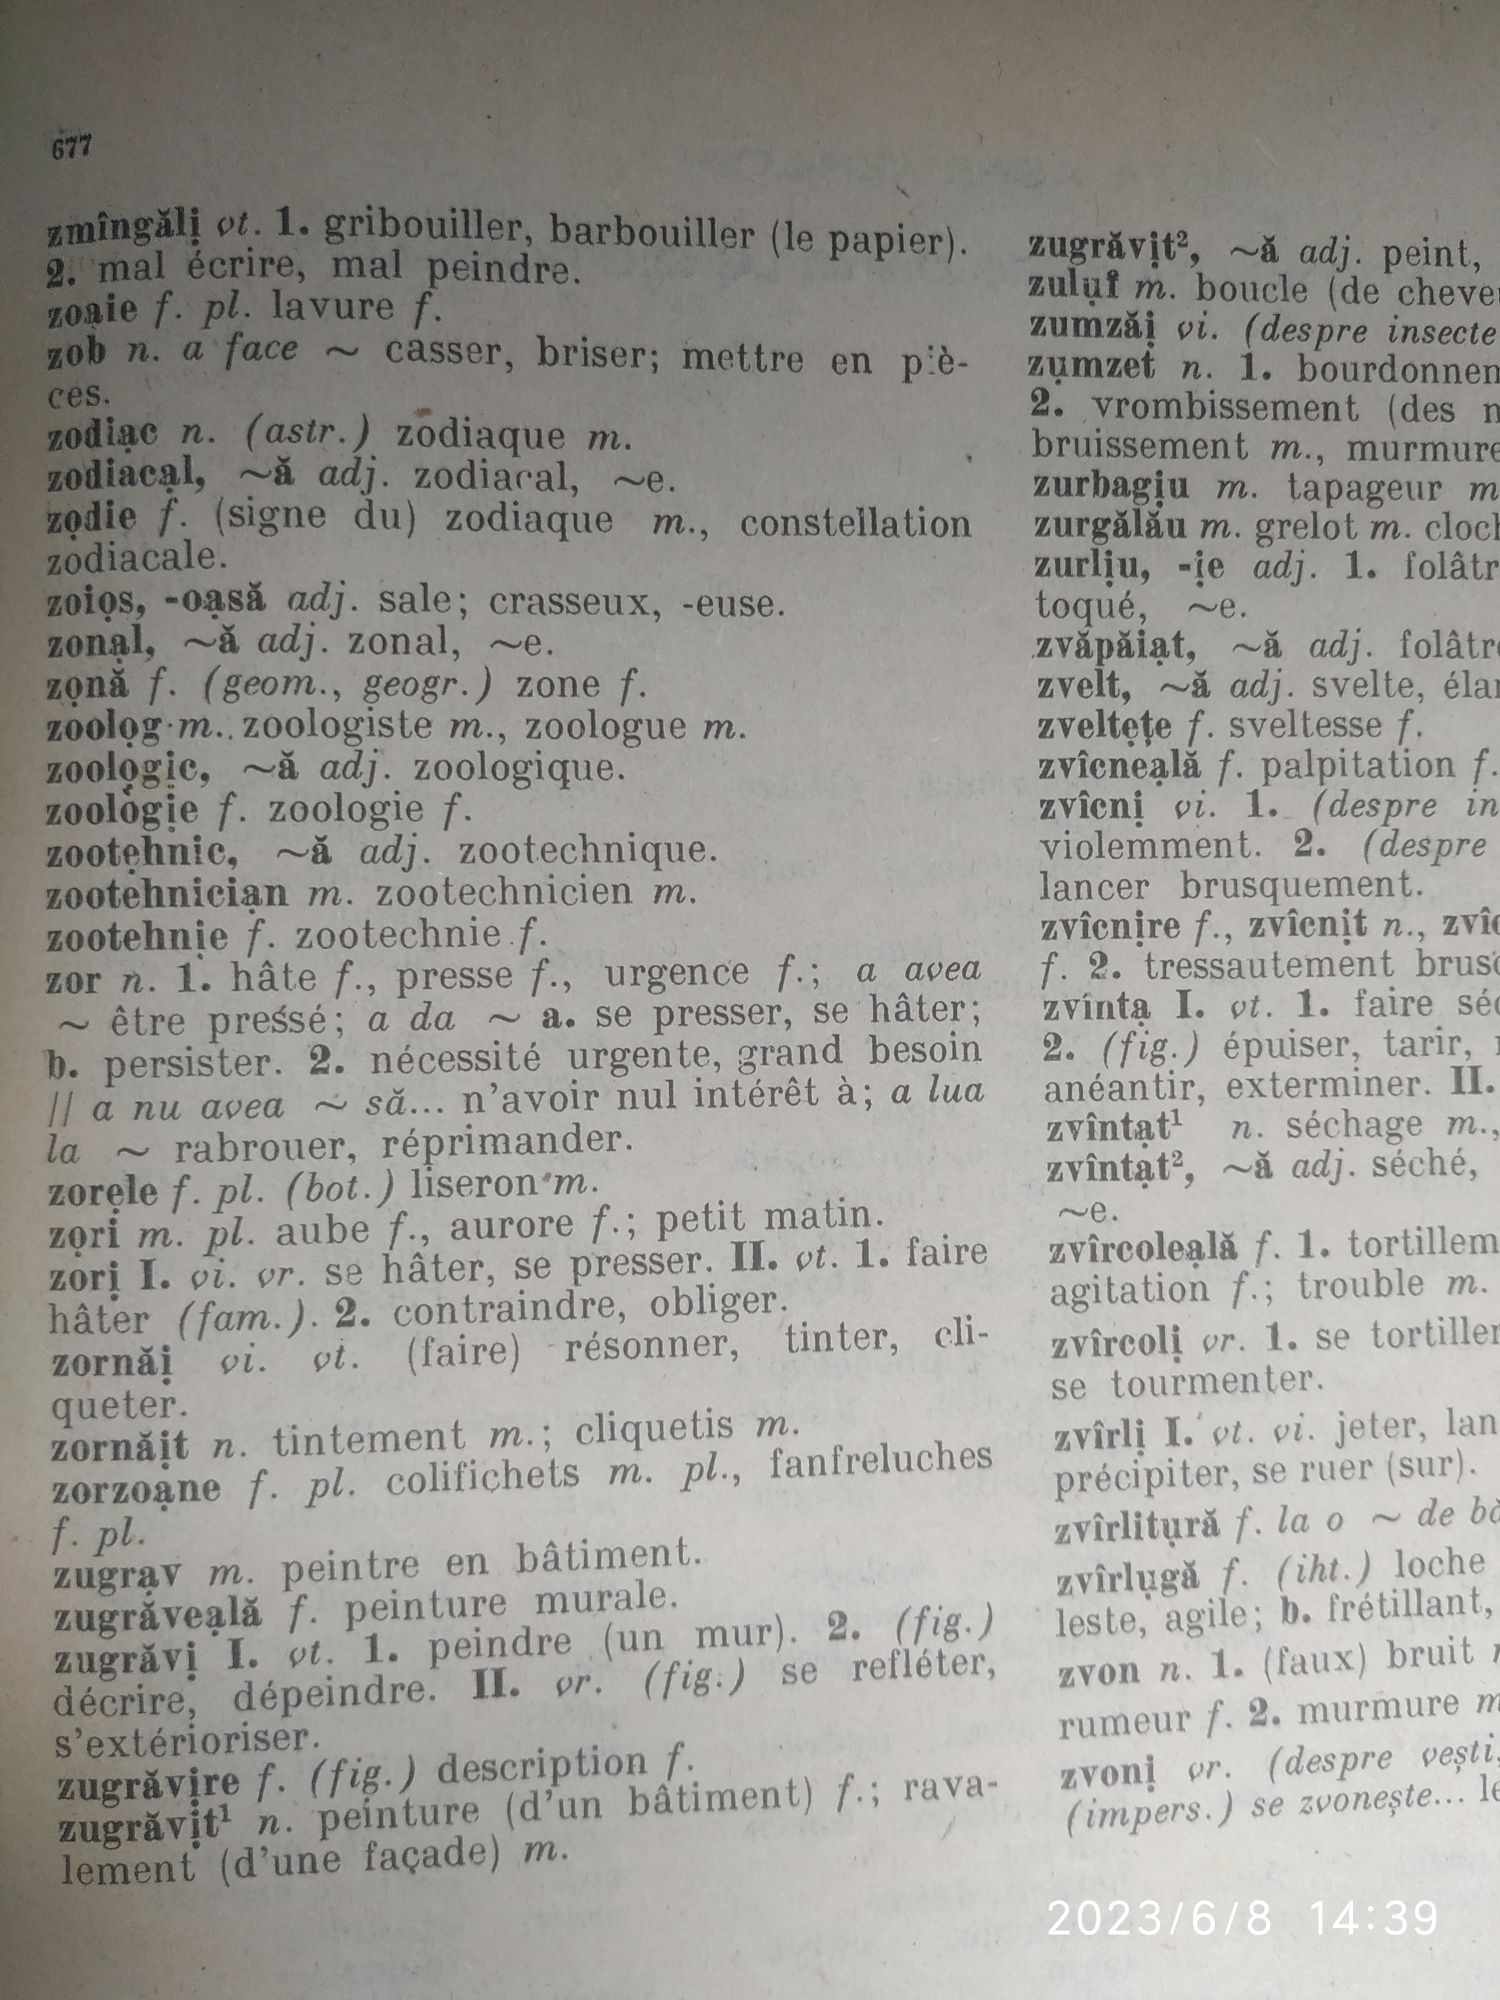 Dictionar Francez Roman, Roman Francez